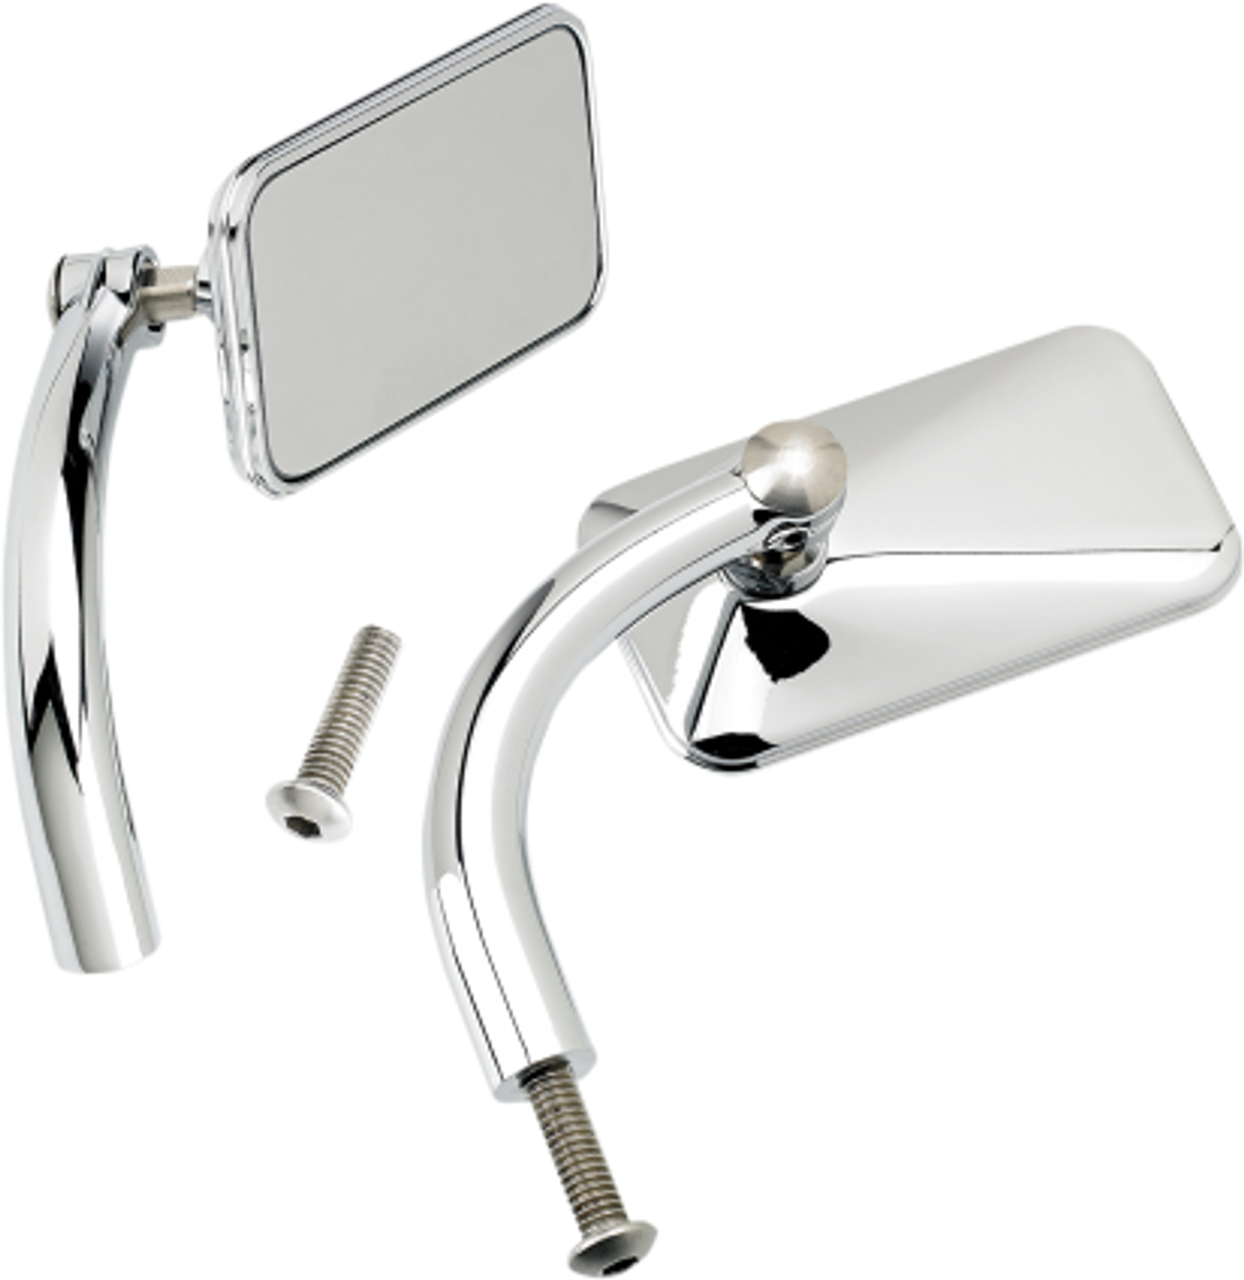 Aランク Mirror Biltwell Utility Mirrors "Chrome Lound Large 6503-501-531  BILTWELL Utility Mirrors 1" Chrome Round Large 6503-501-531 